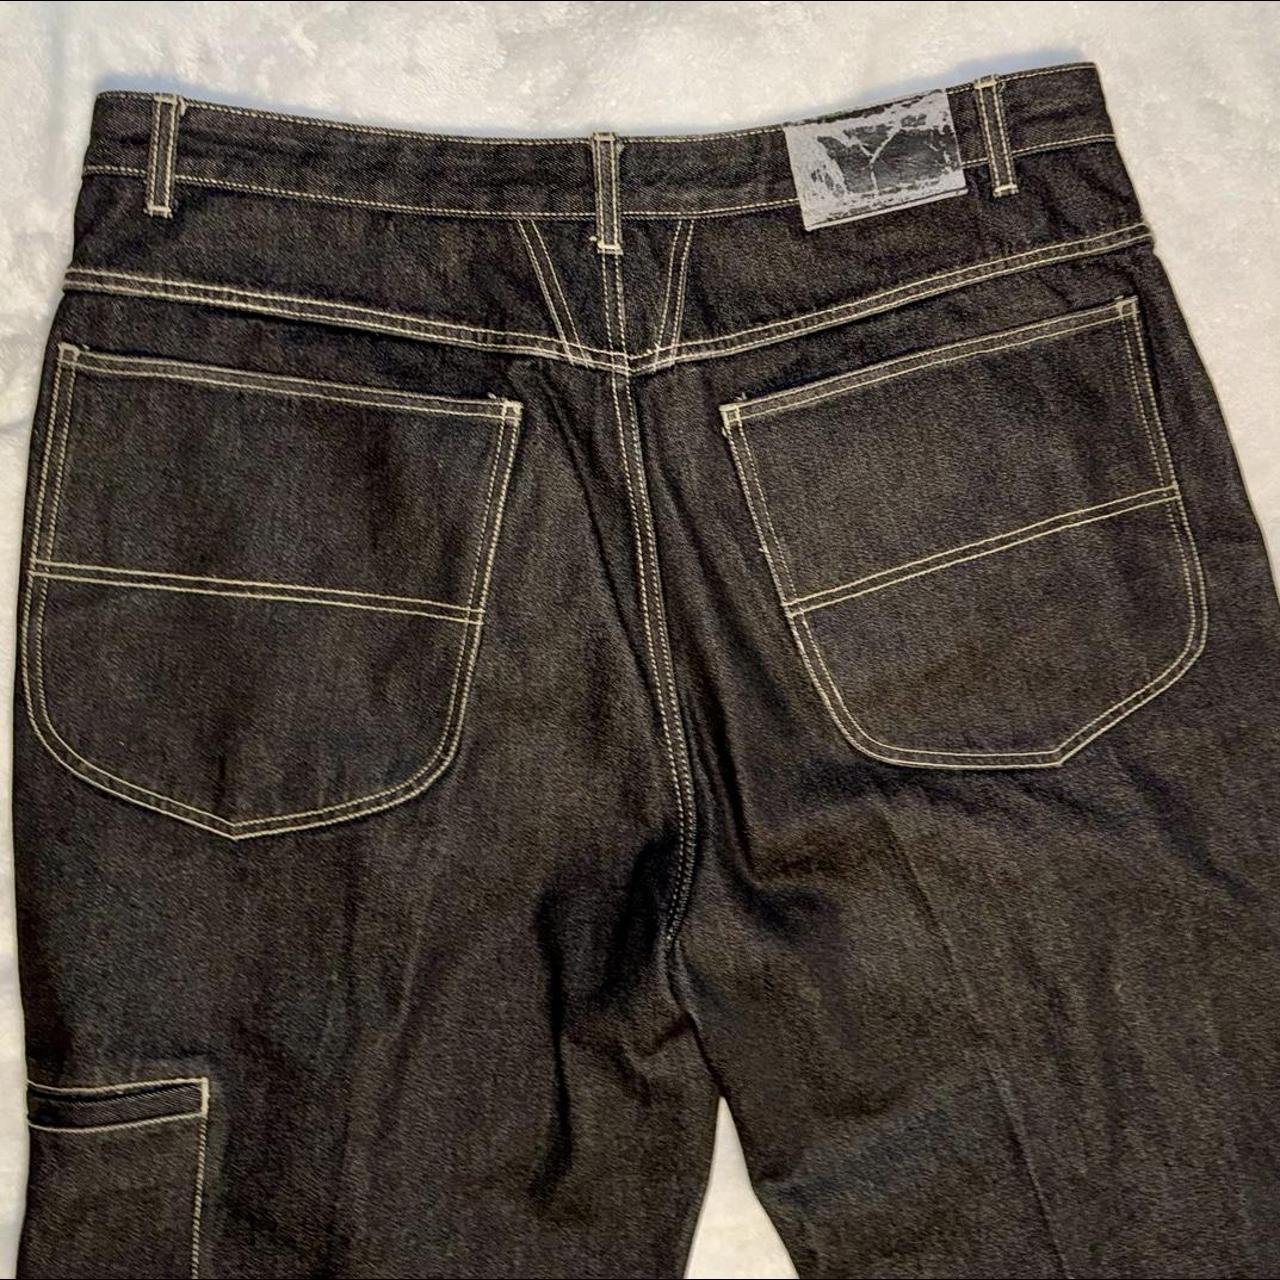 Vintage MARITHÉ FRANÇOIS GIRBAUD Jeans in great... - Depop